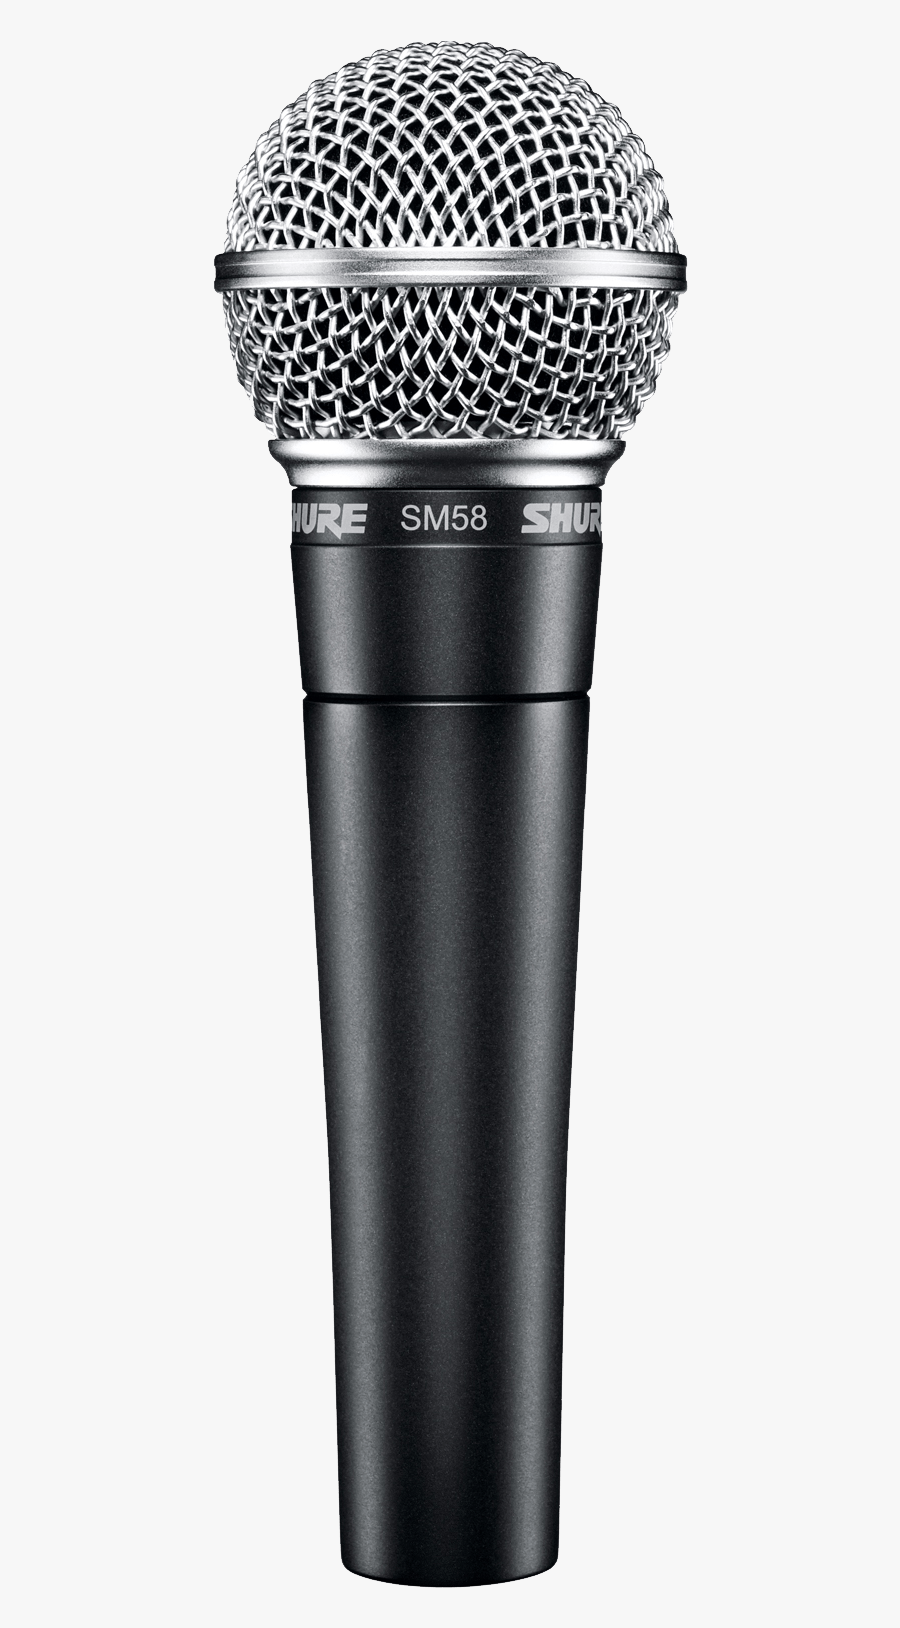 Sm58 Shure Microphone - Shure Sm58 Png, Transparent Clipart